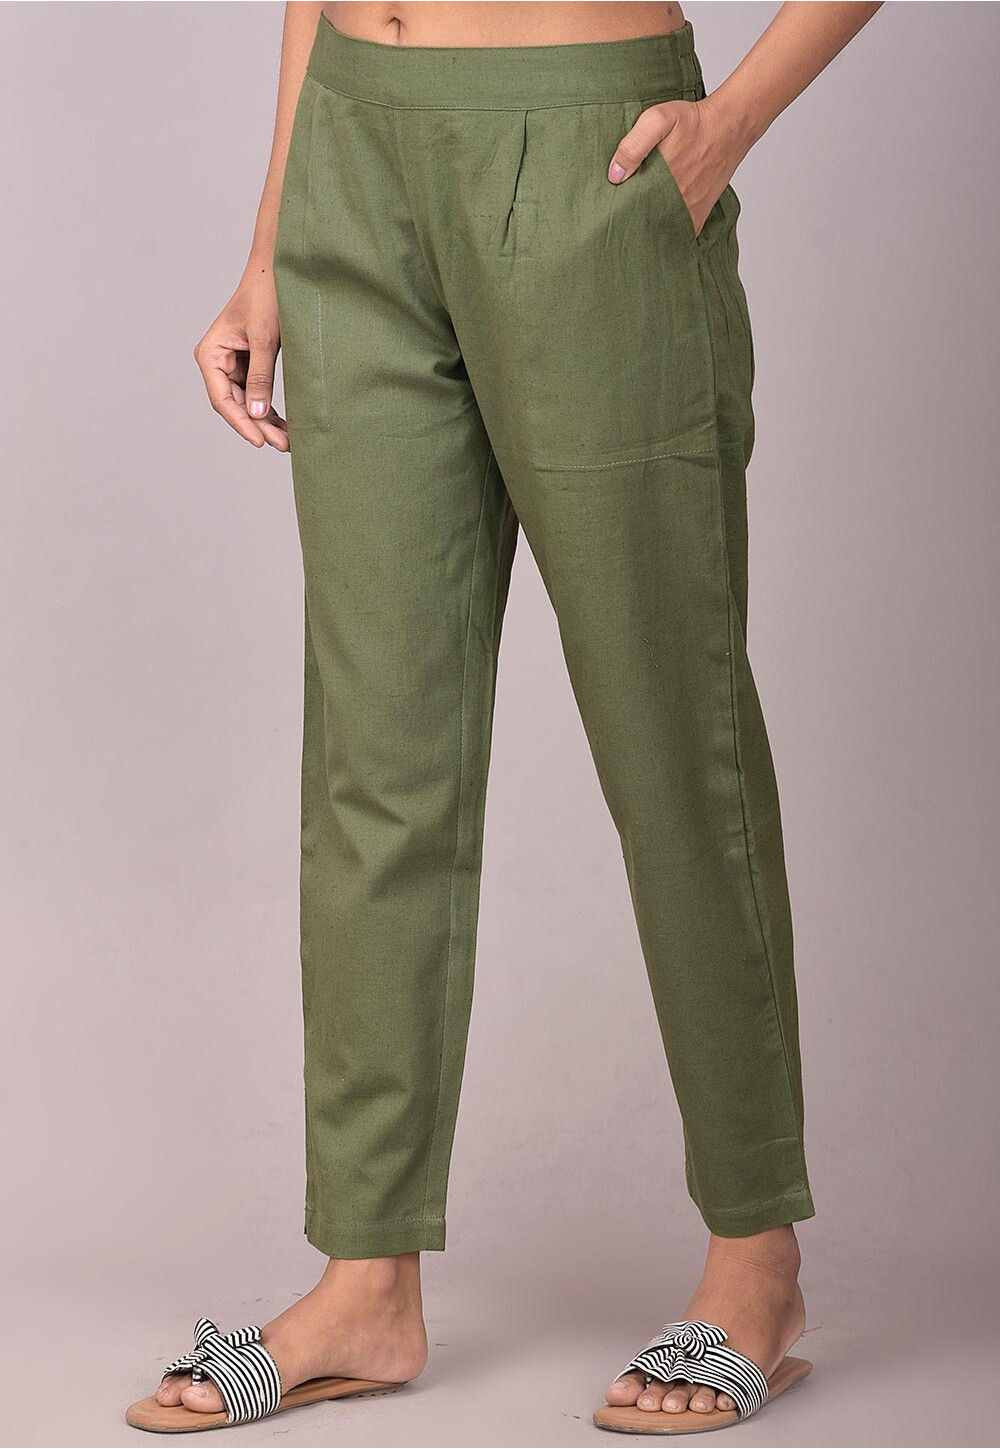 Olive Drab - Military BDU Pants - Cotton Ripstop - Galaxy Army Navy